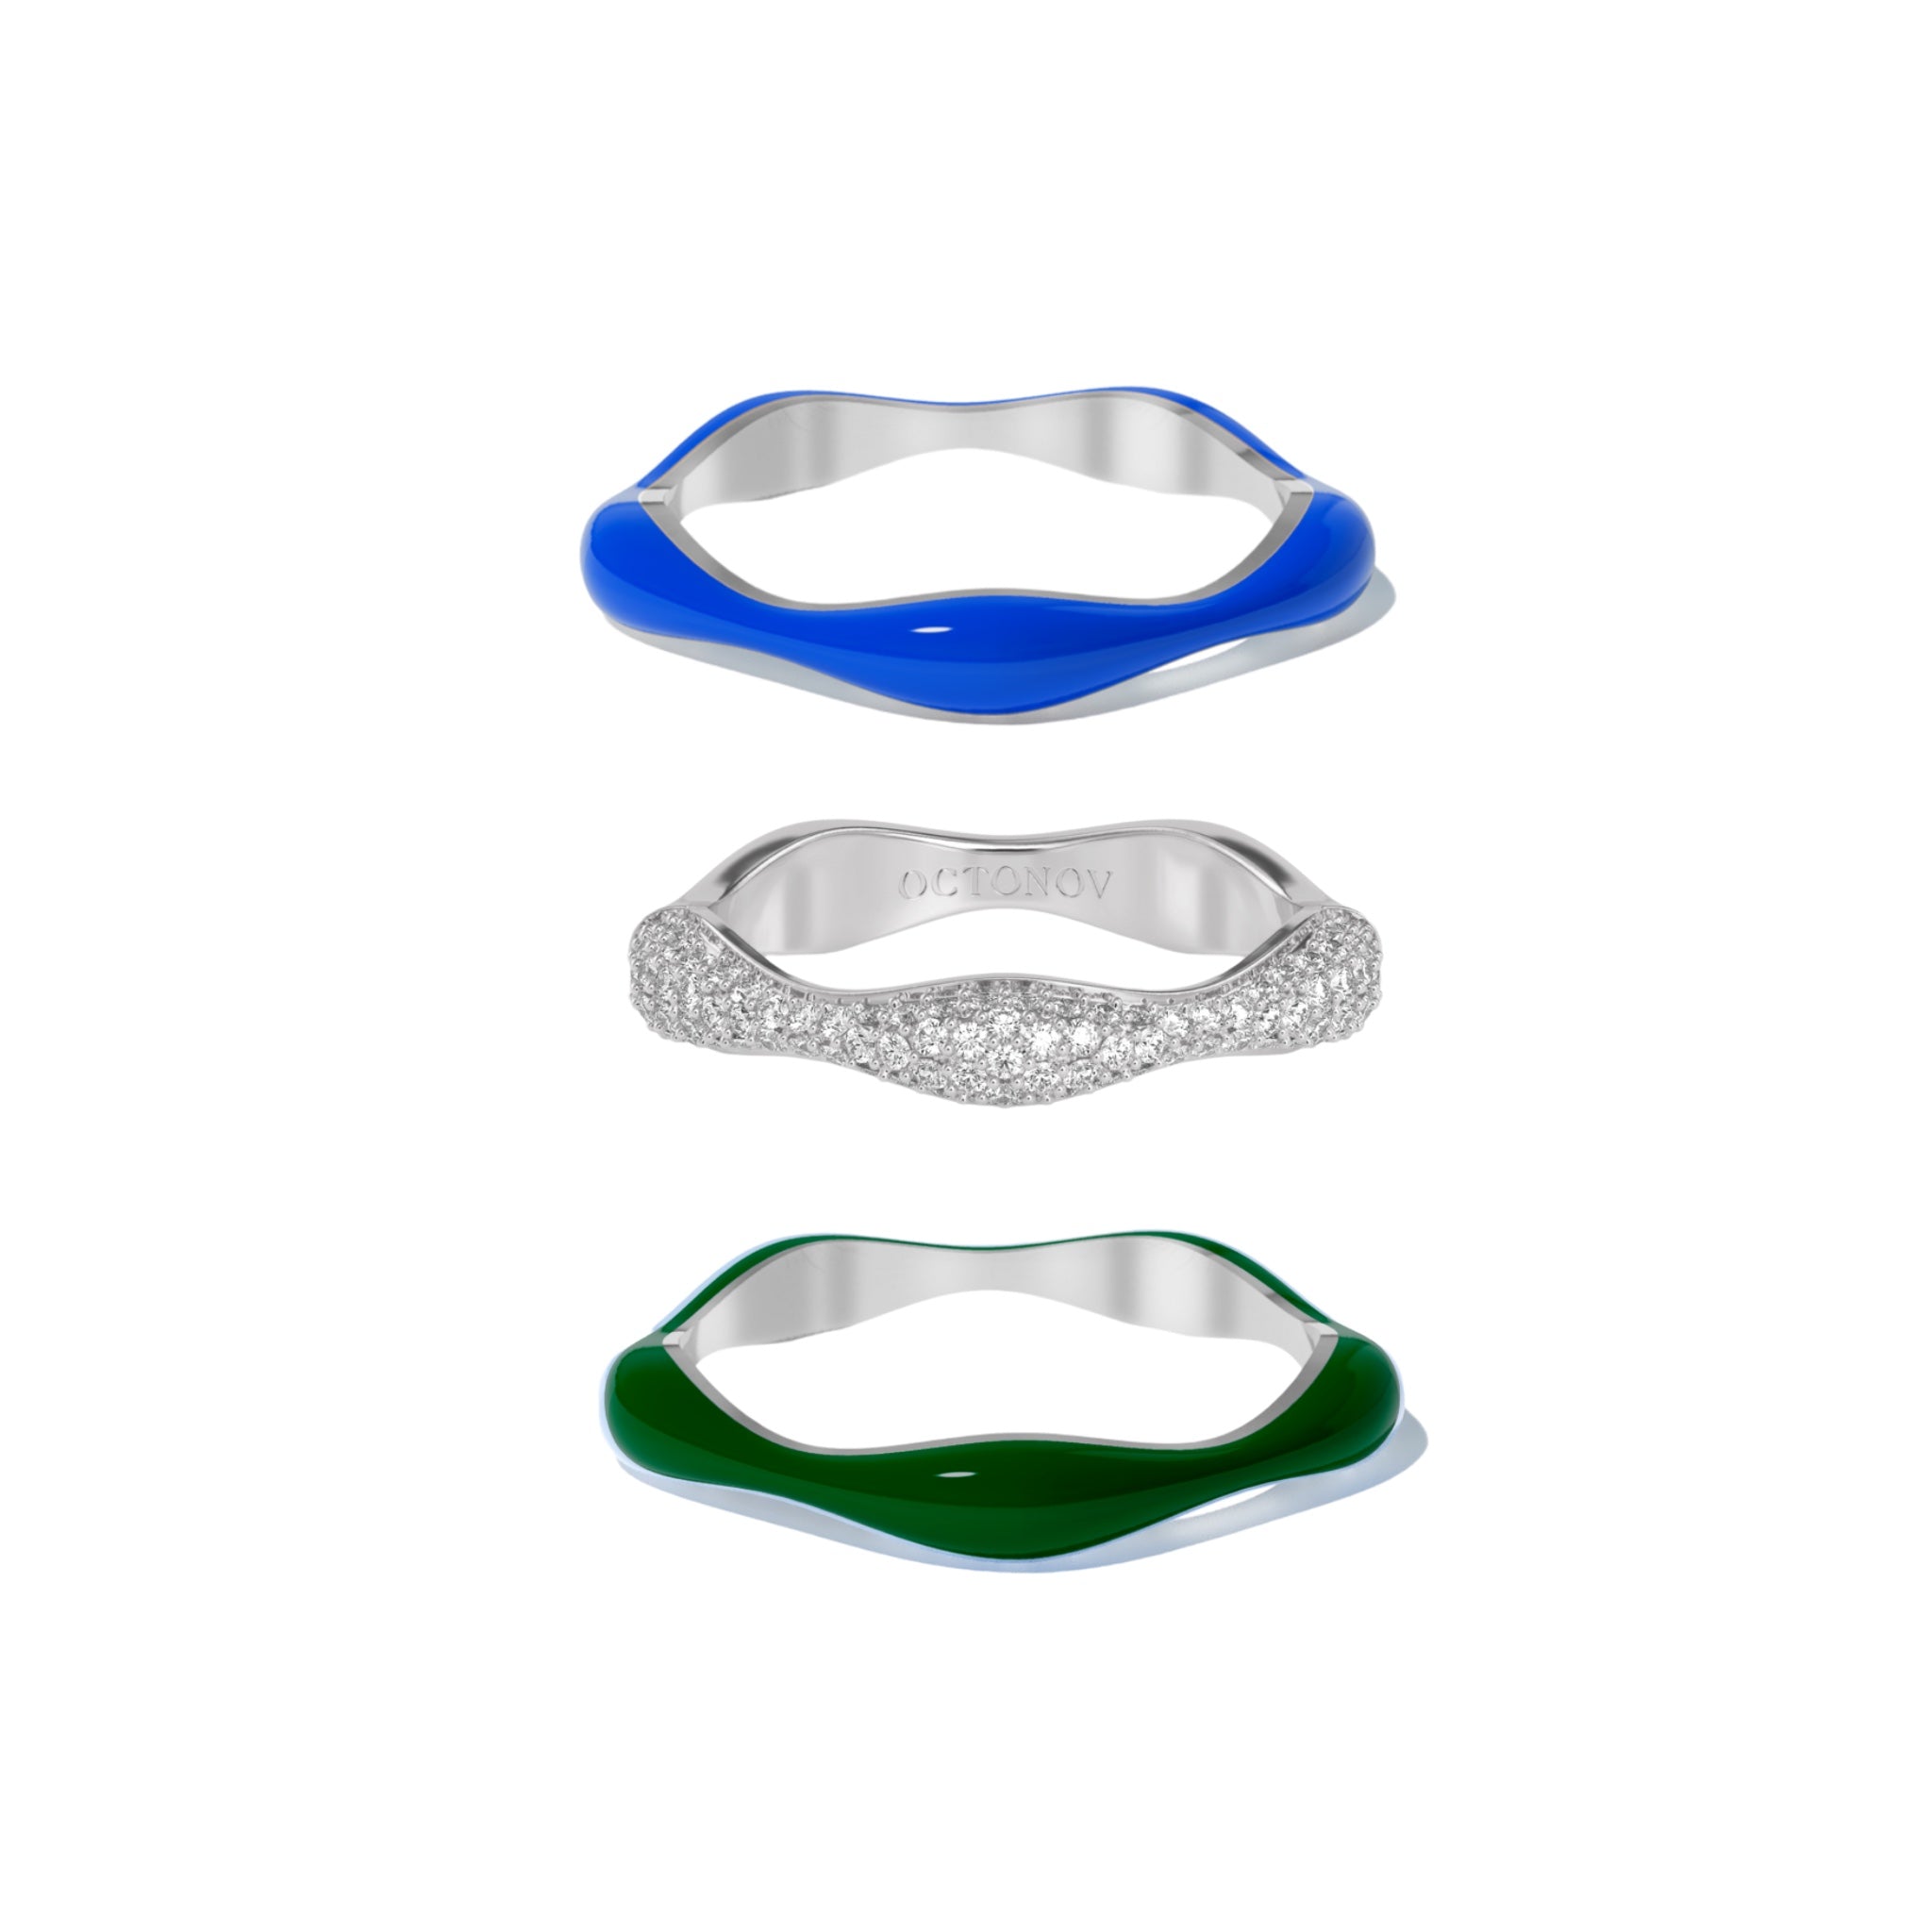 Sorbet Swirls Royal Blue & Dark Green Enamel & Diamond Swirls Stacker Ring Set of 3 - Octonov 